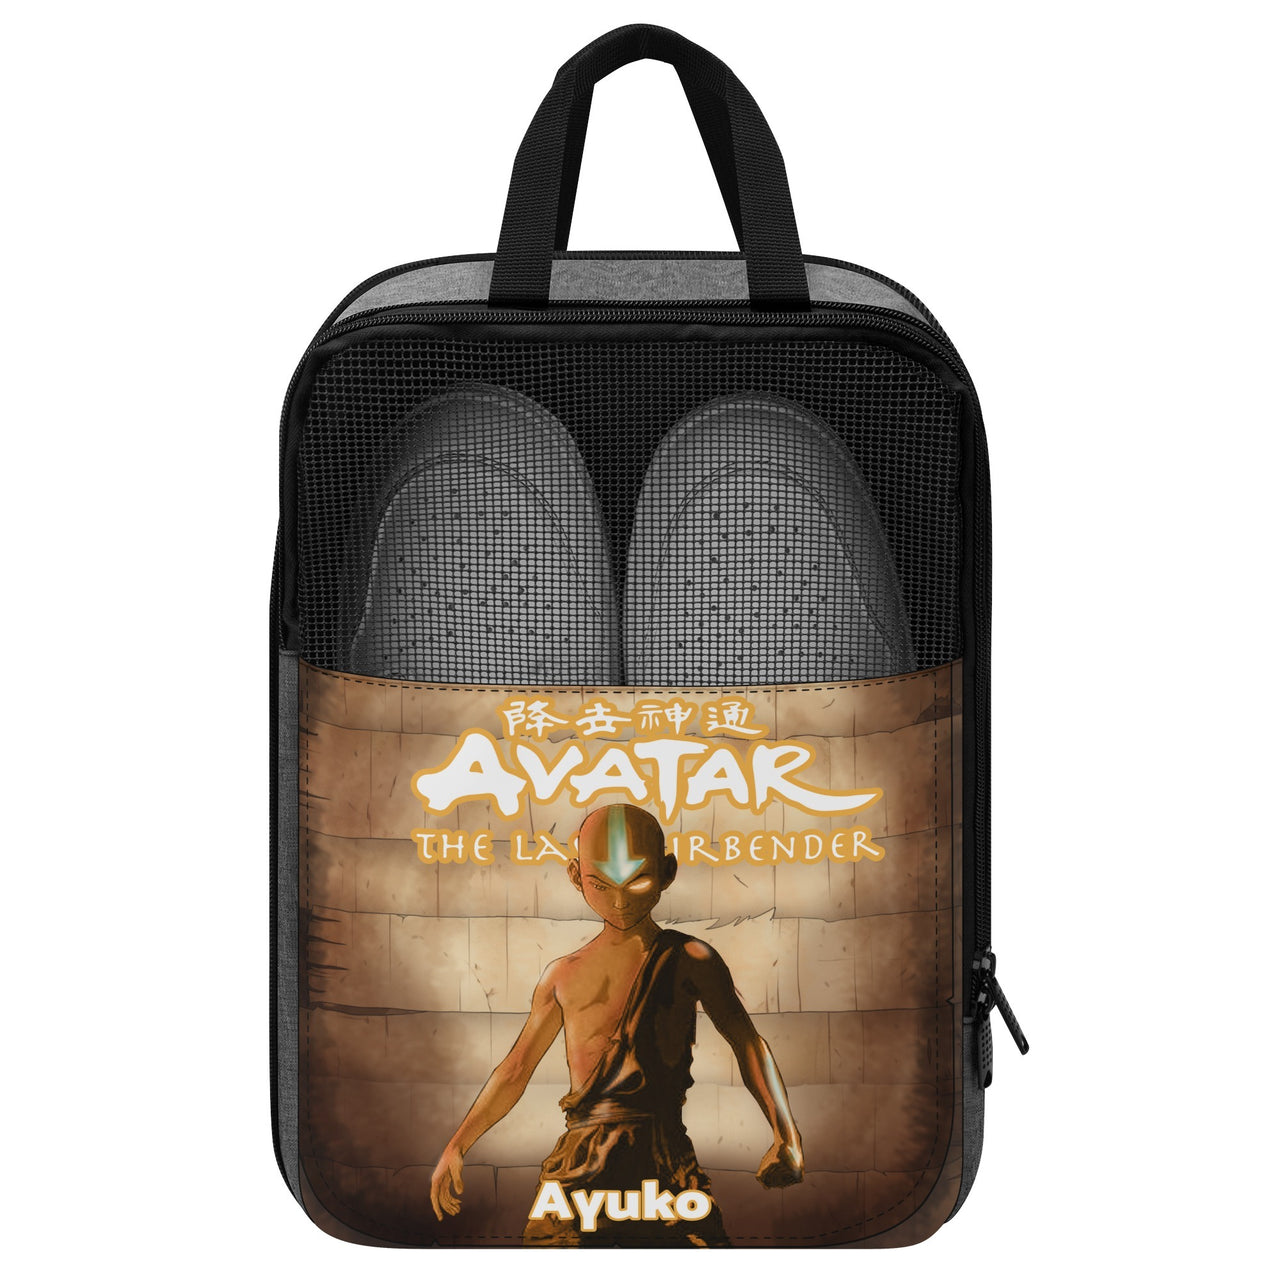 Avatar The Last Airbender Shoe Bag